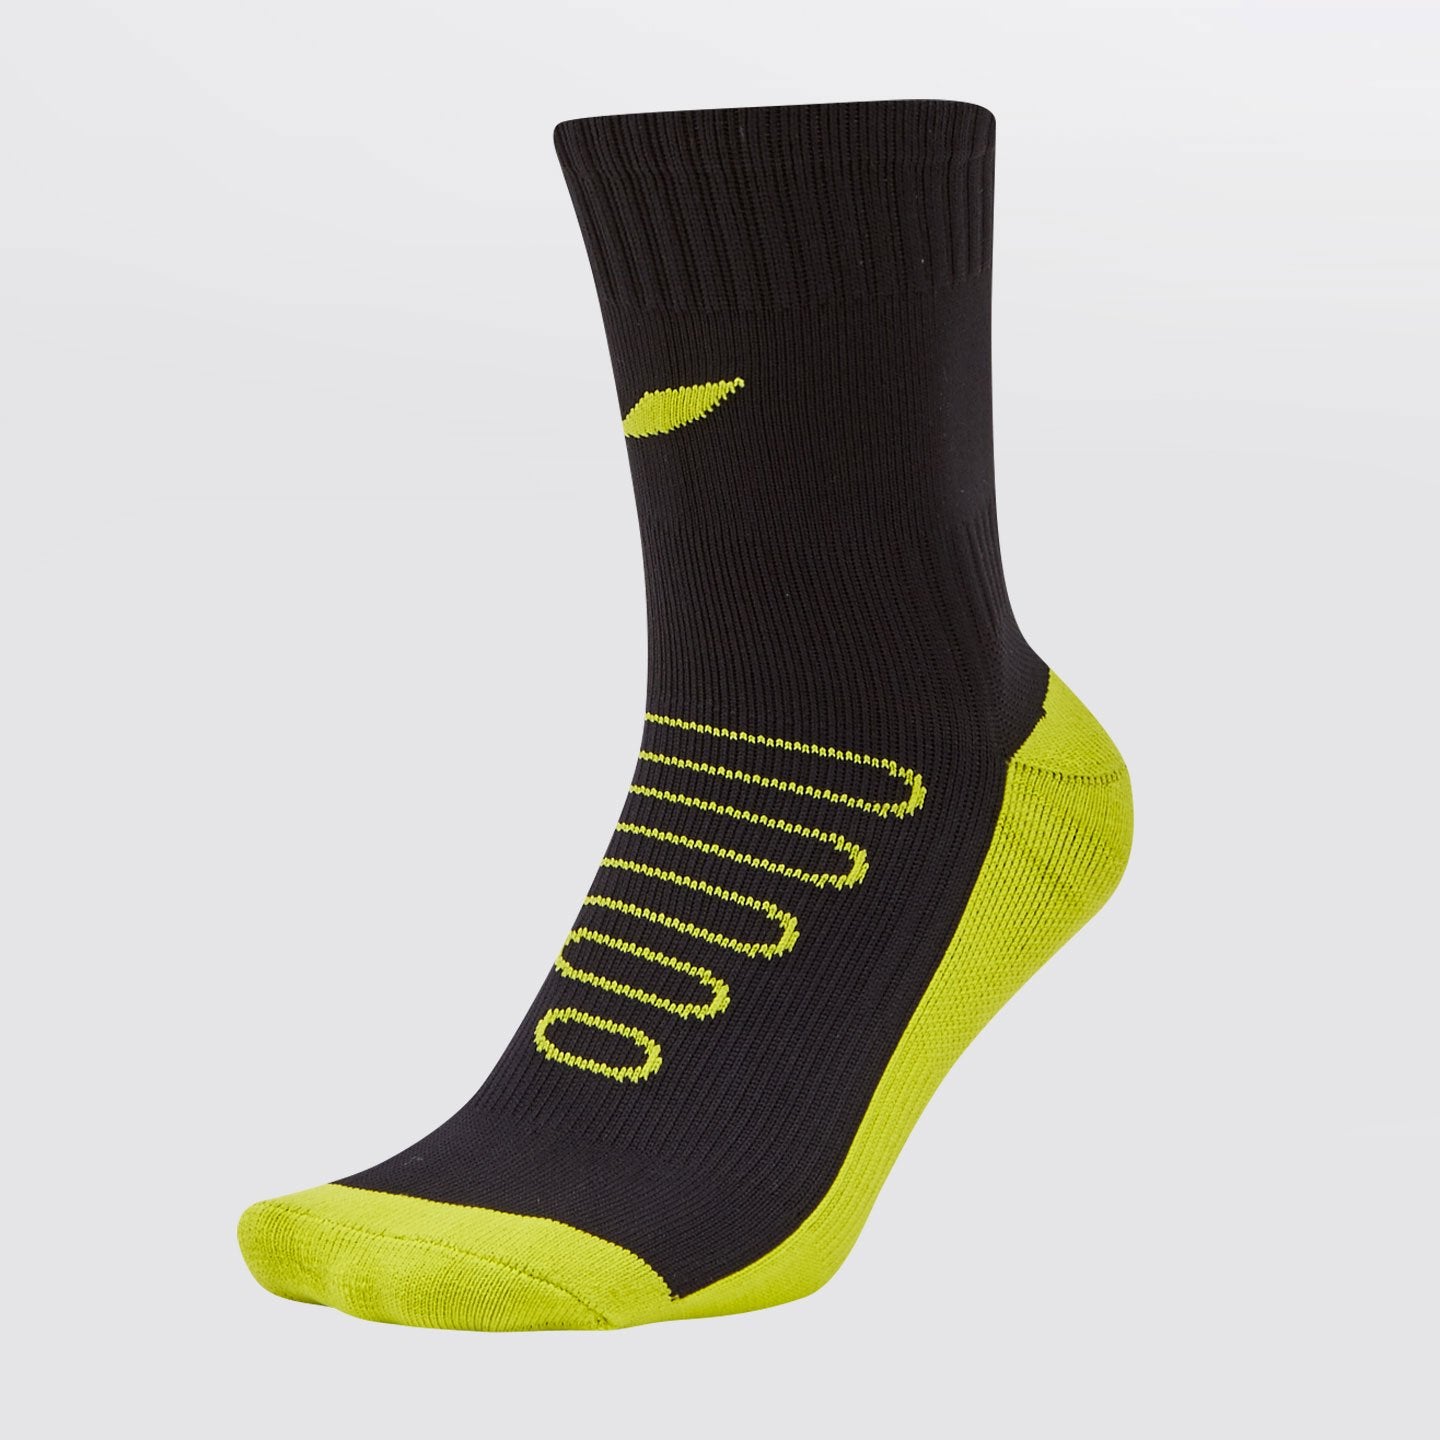 Concave Performance Mid Socks - Black/Lime